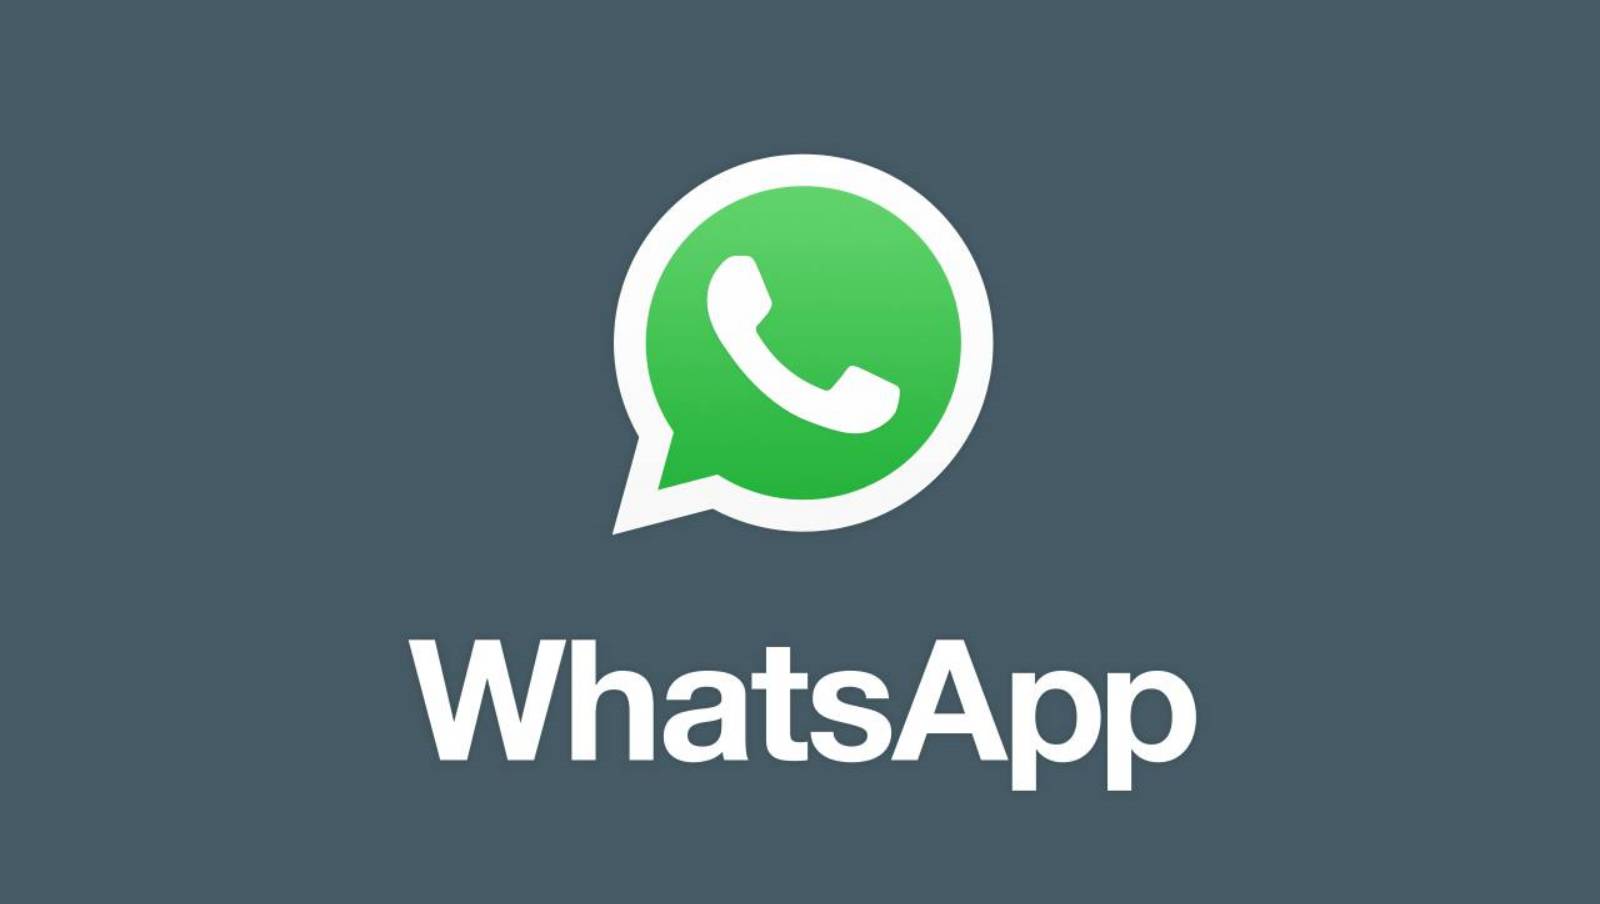 WhatsApp usunięty